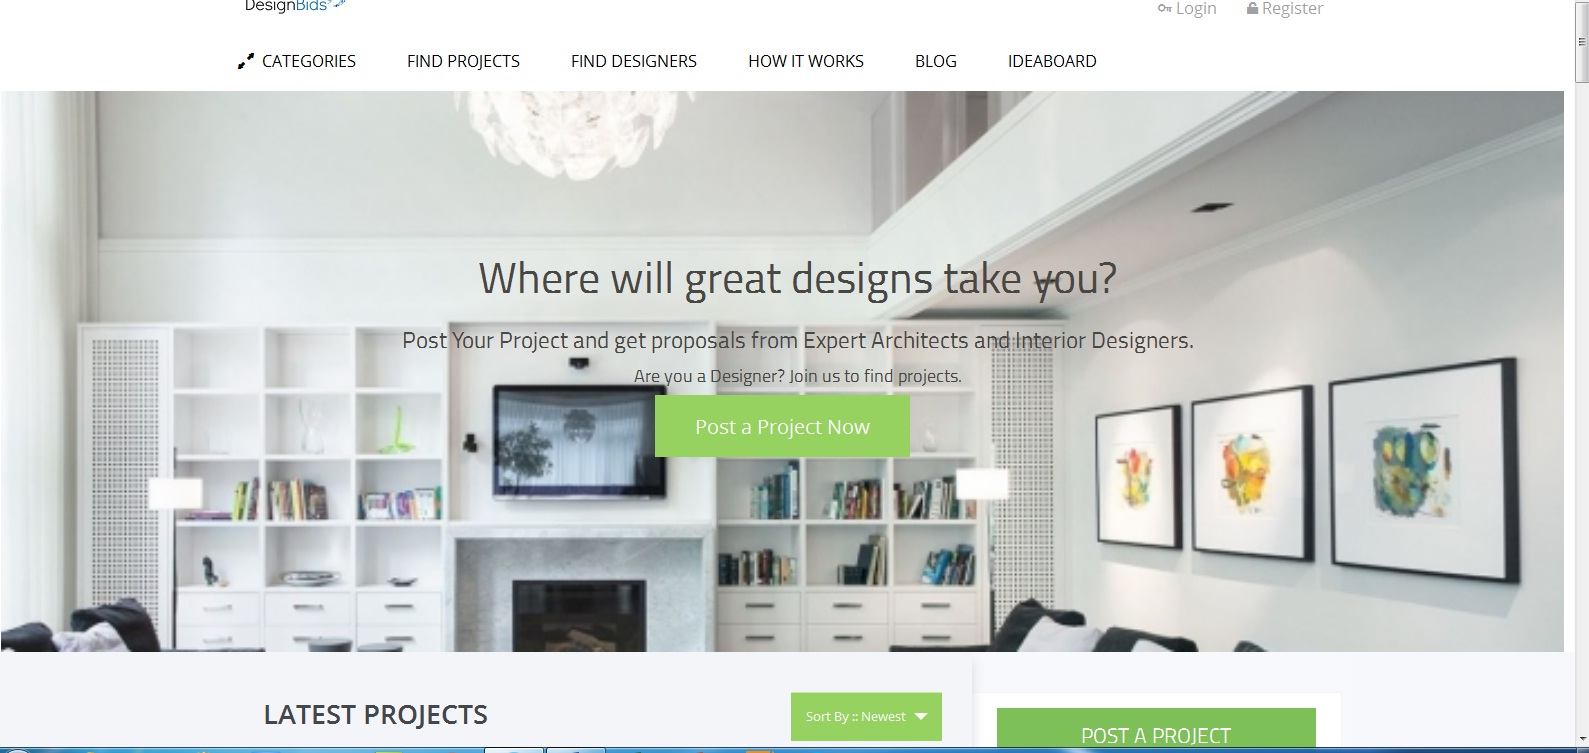 DesignBids – A platform for architecture